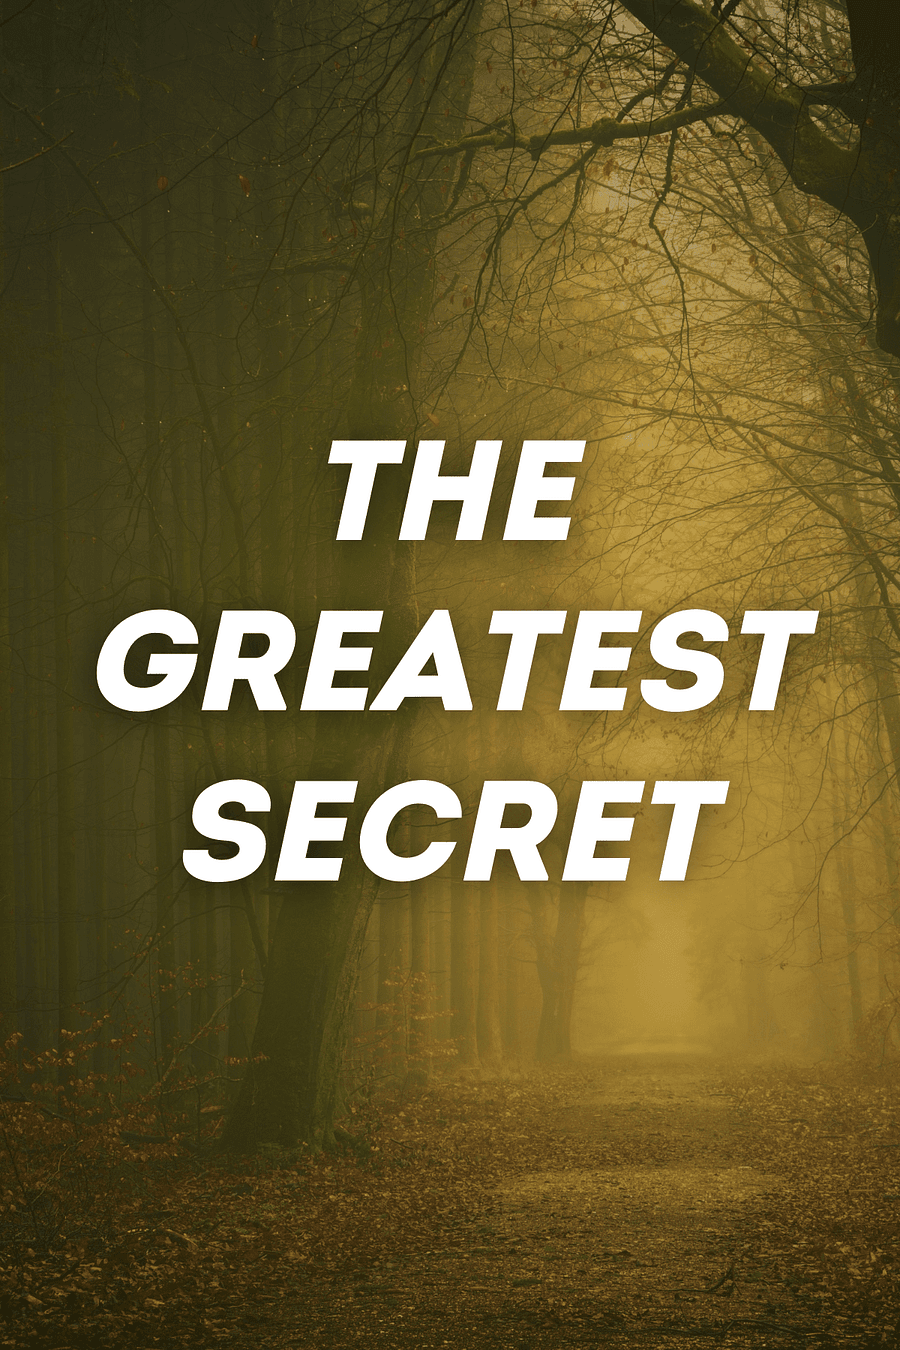 The Greatest Secret (The Secret) by Rhonda Byrne - Book Summary